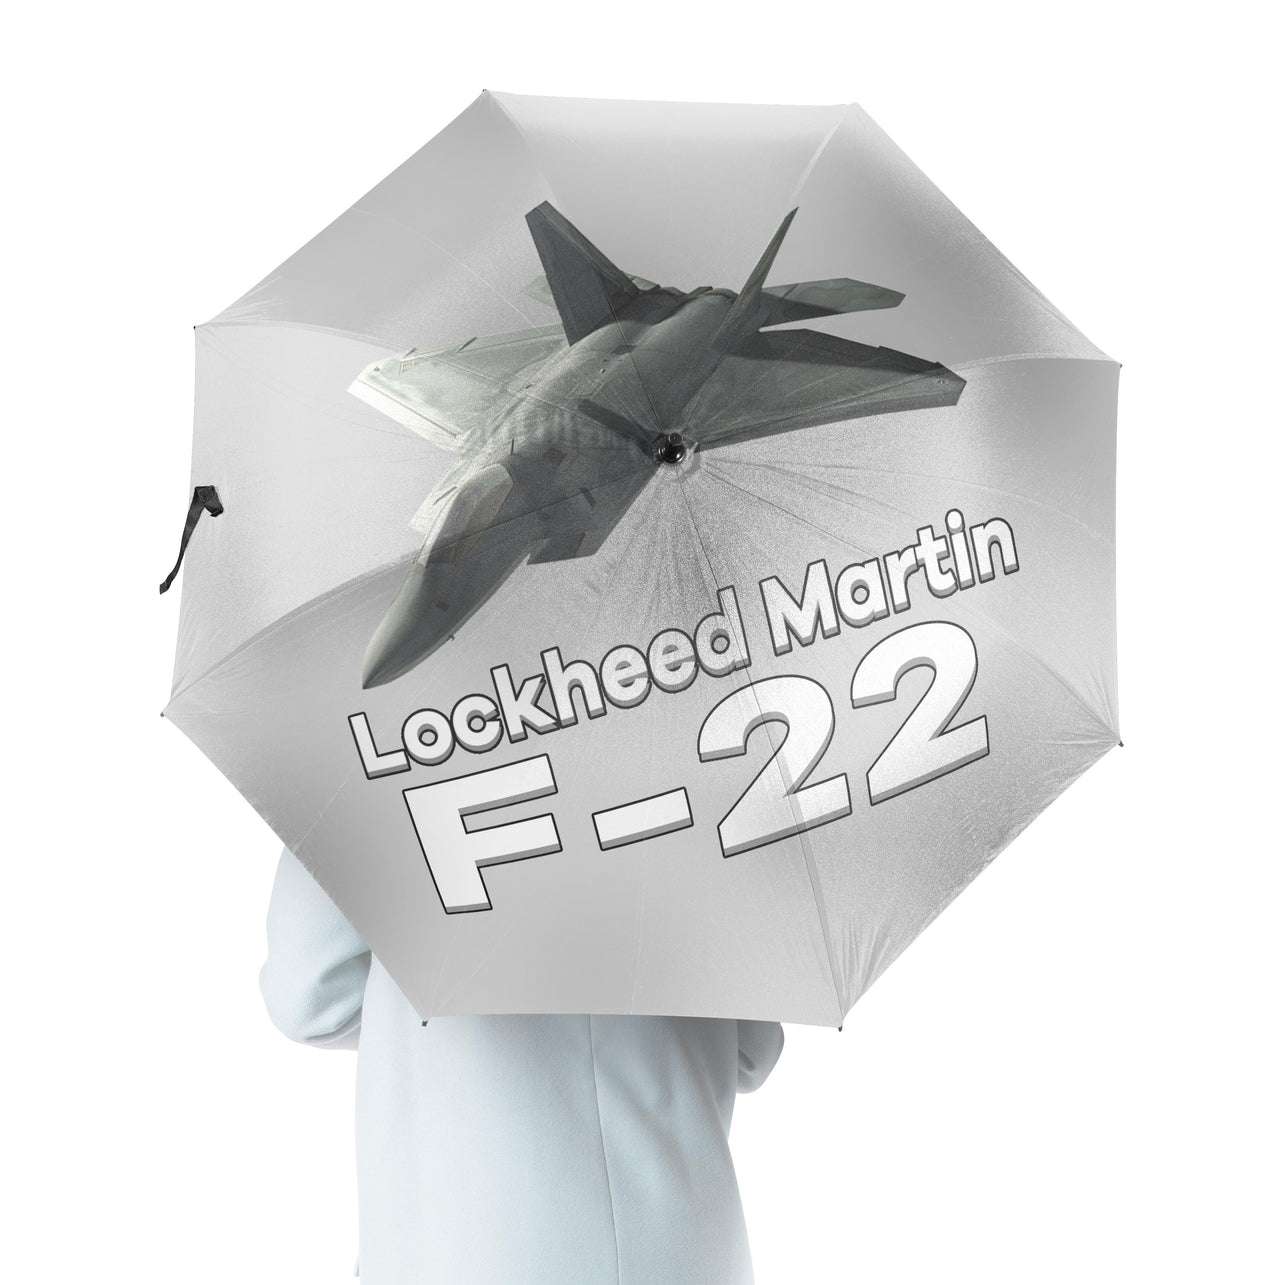 The Lockheed Martin F22 Designed Umbrella